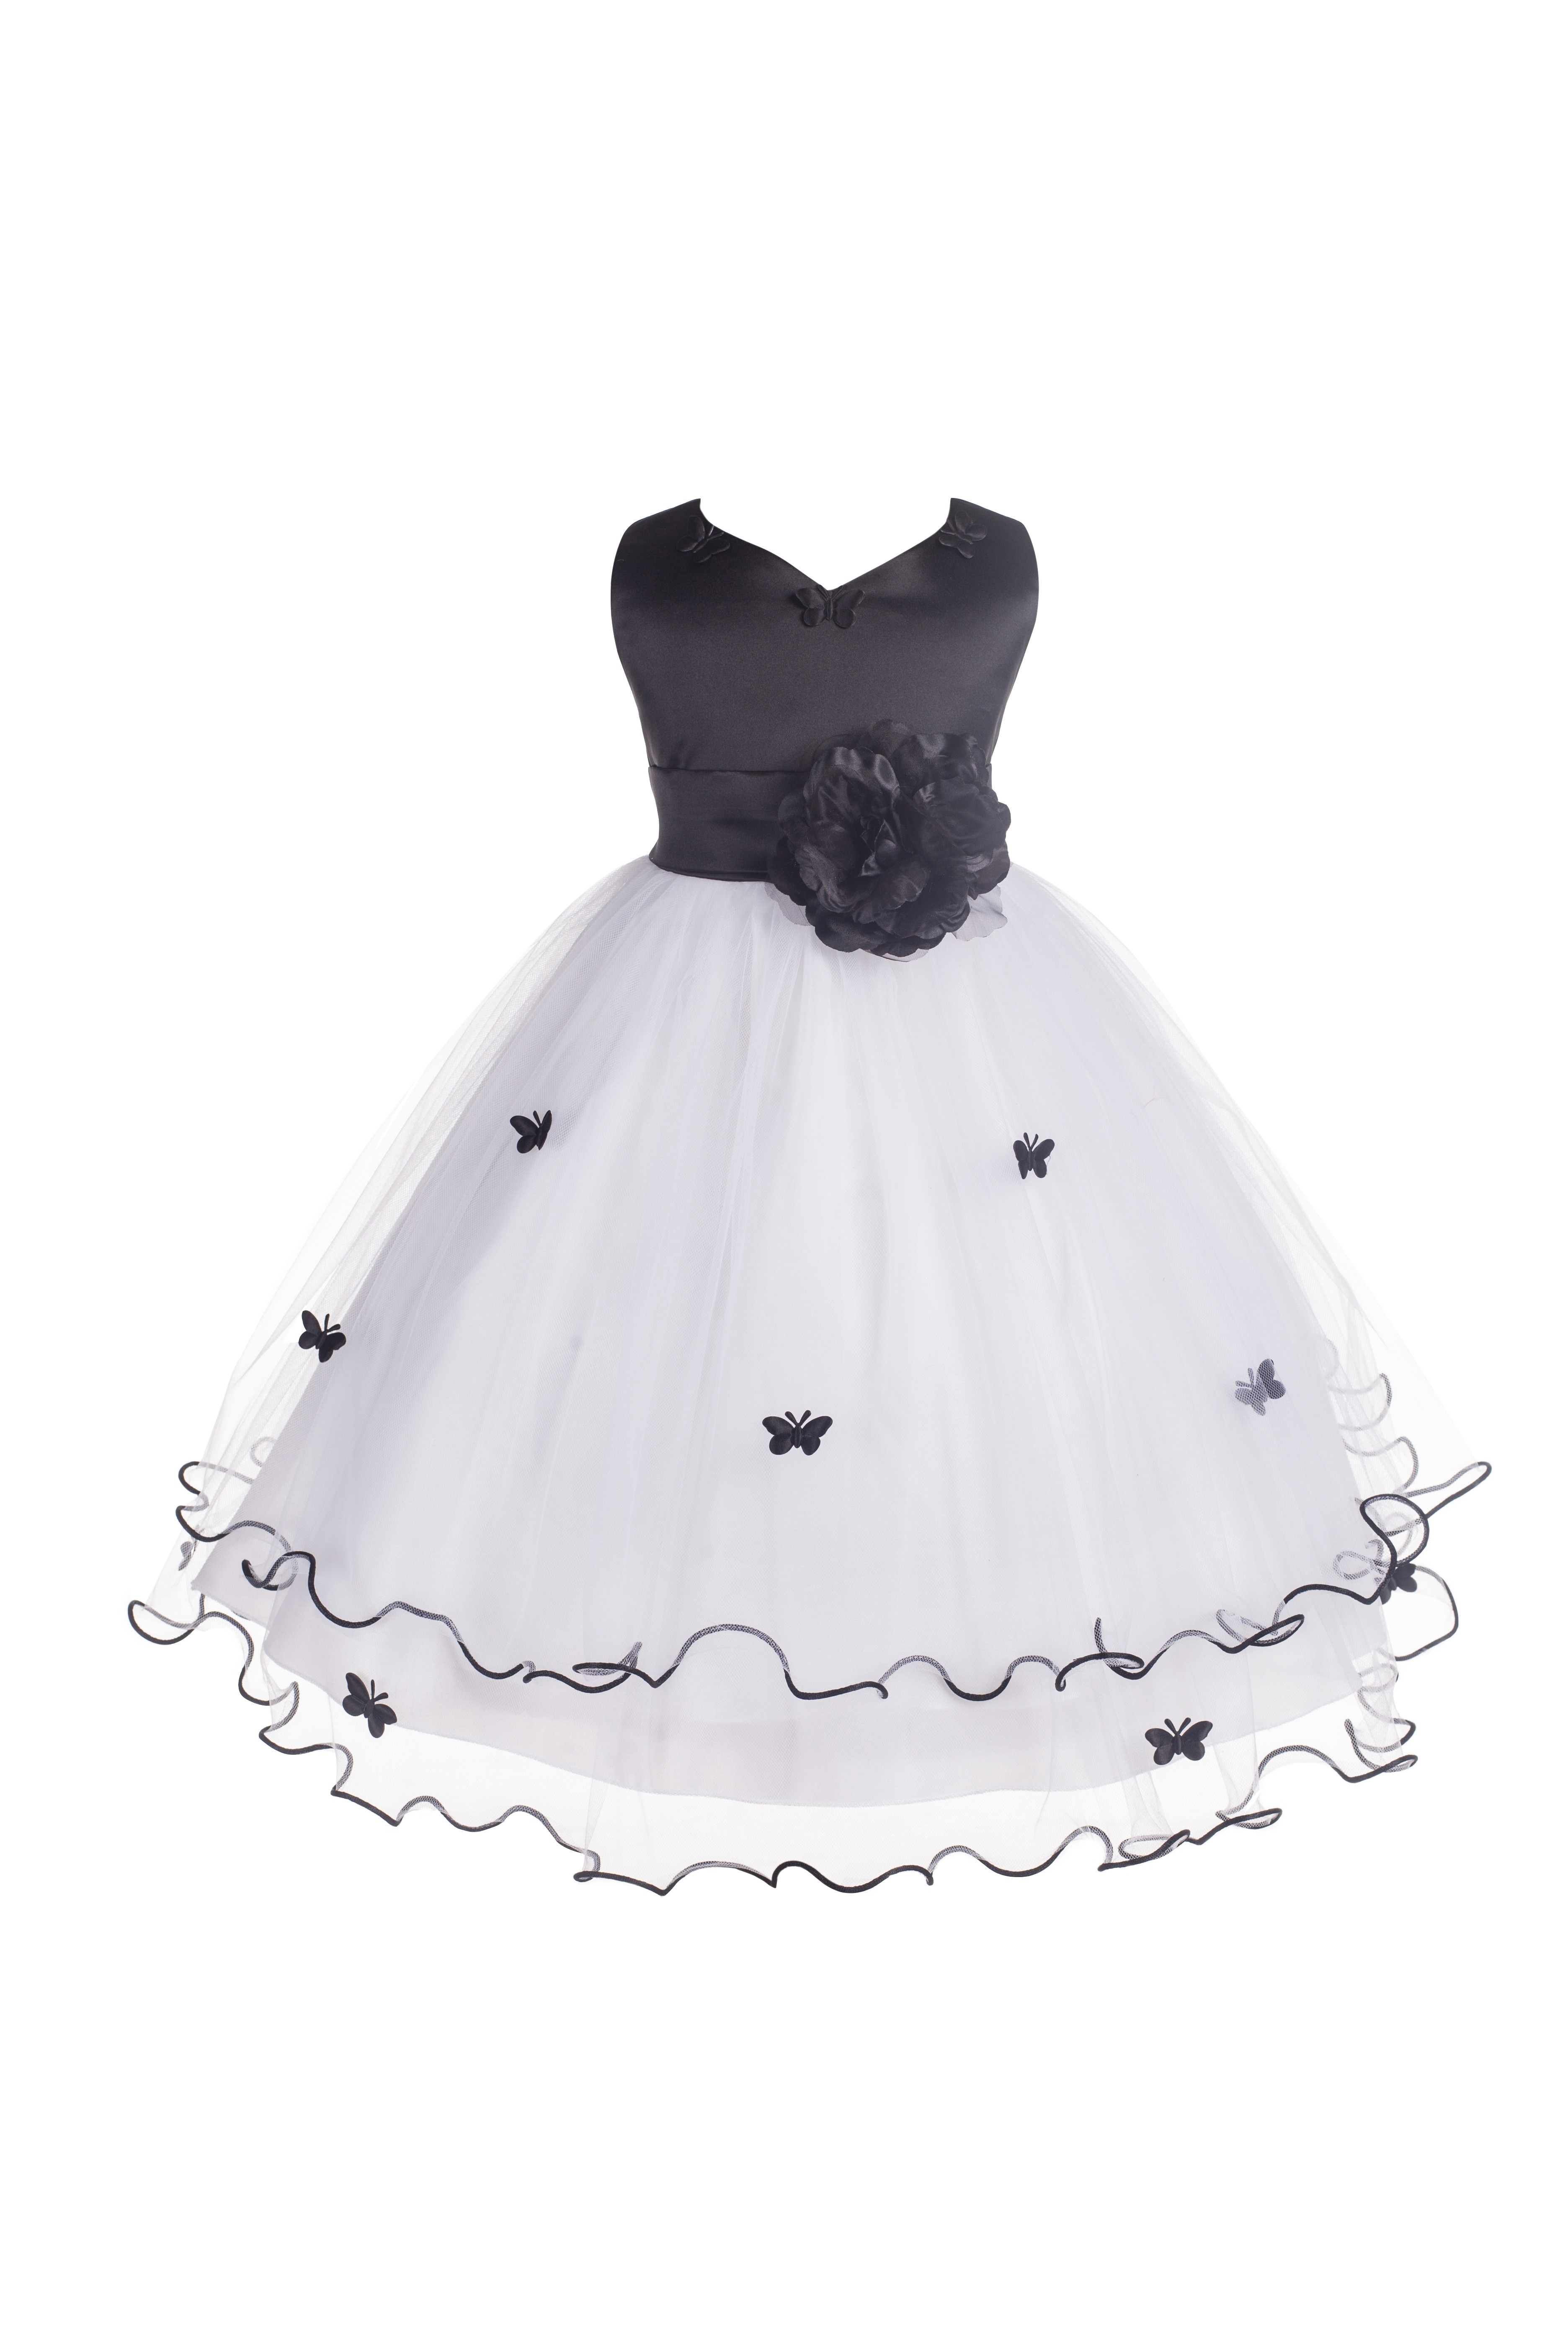 Black Satin Tulle Butterflies Flower Girl Dress Occasions 801T